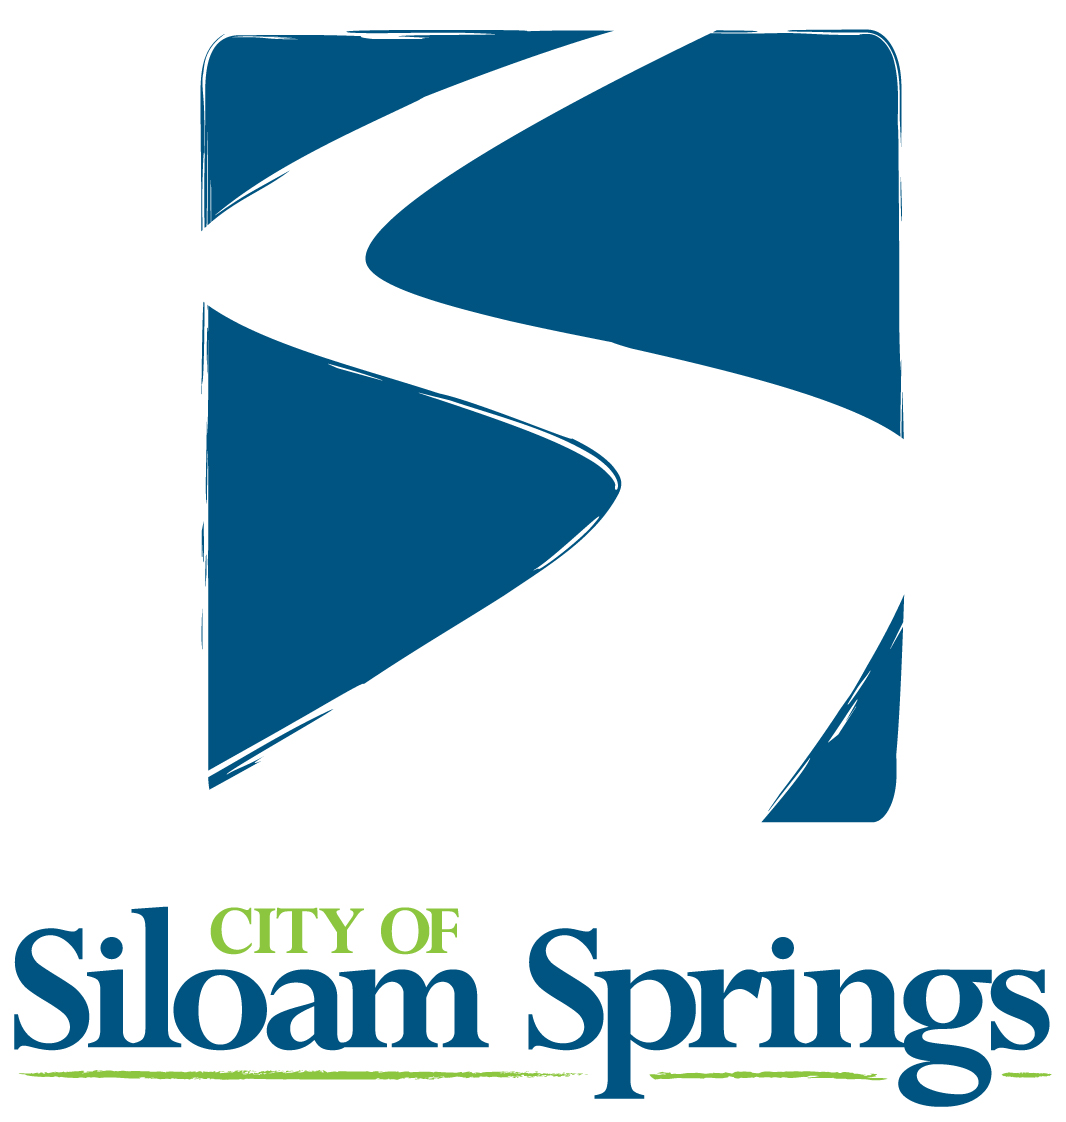 City of Siloam Springs